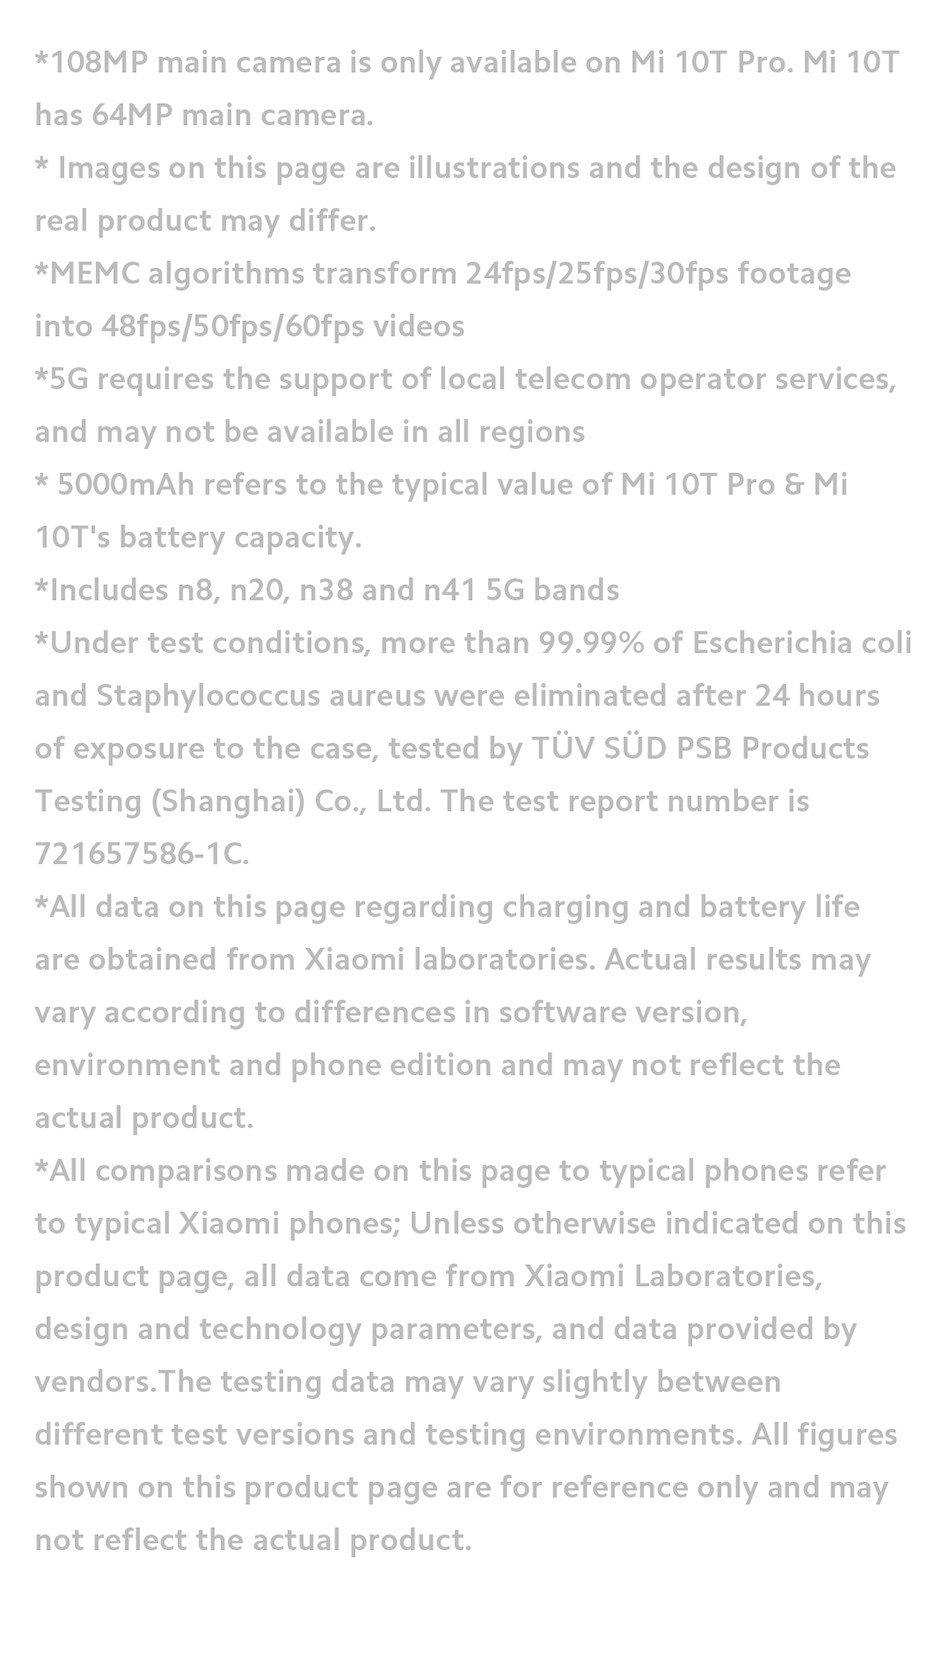 Xiaomi Mi 10T Snapdragon 865 6GB + 128GB 6.67 polegadas FHD + Dotdisplay 64MP AI Camera Smartphone